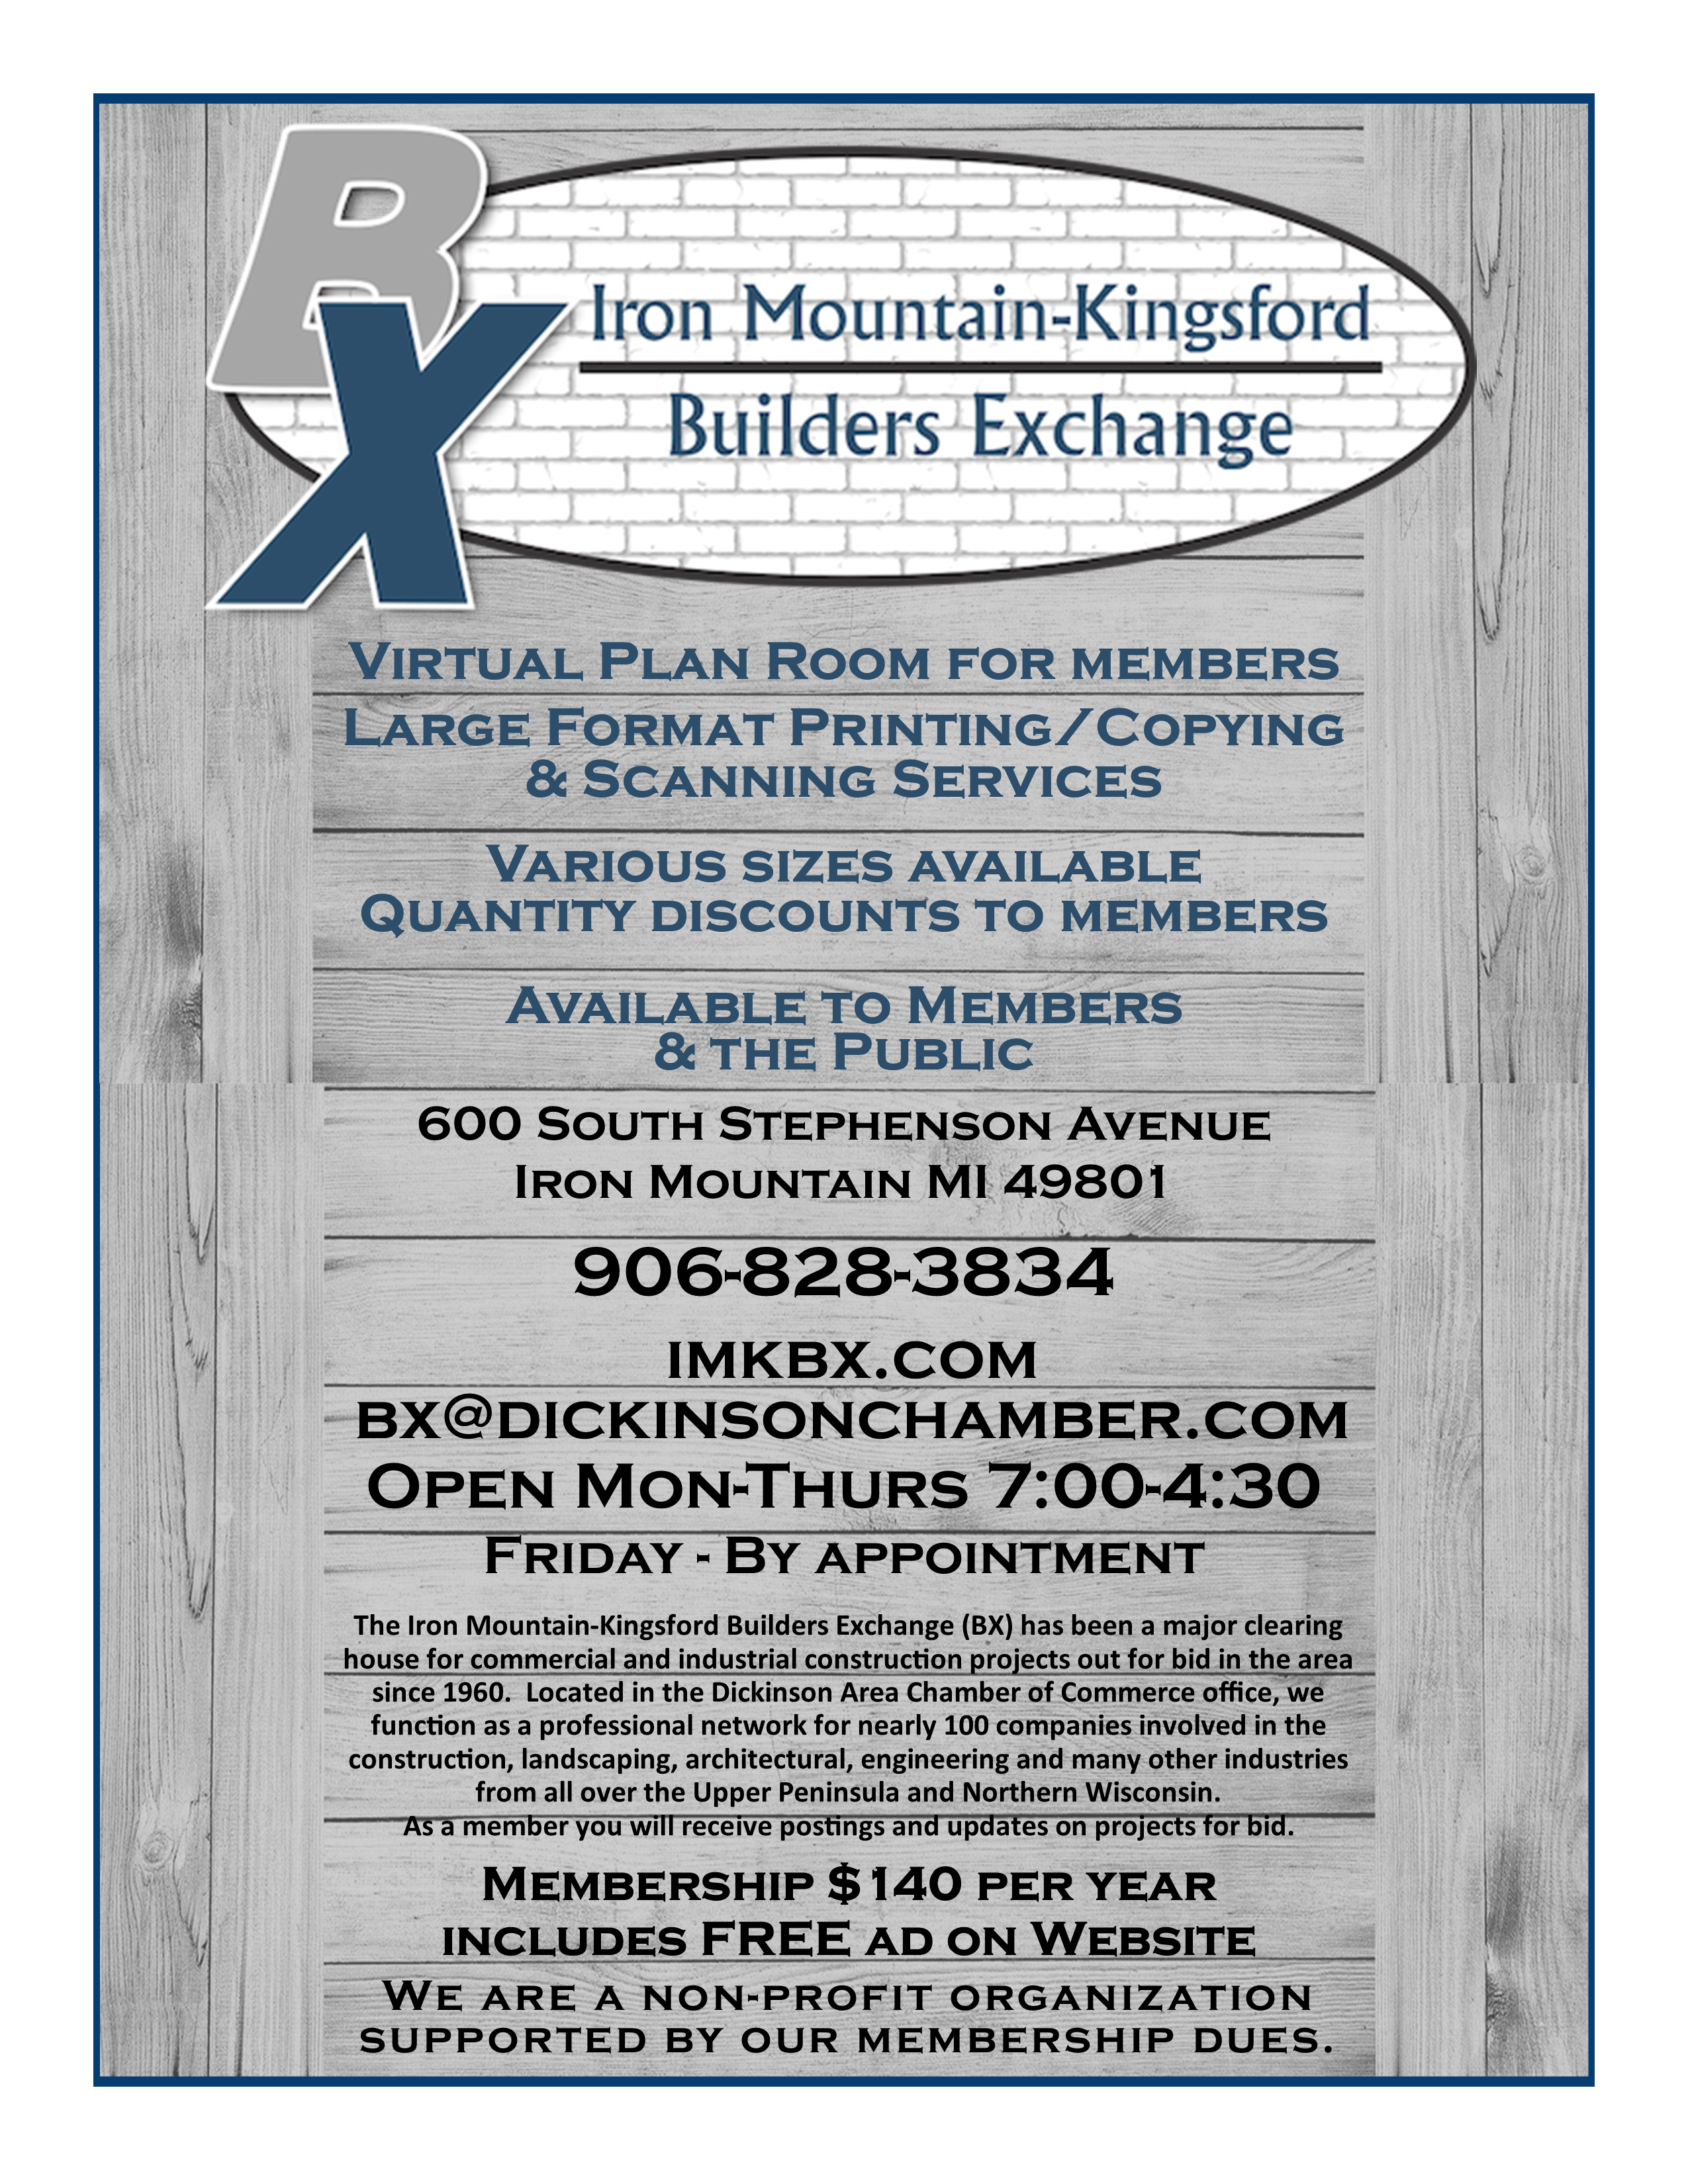 Iron Mountain-Kingsford Builders Exchange